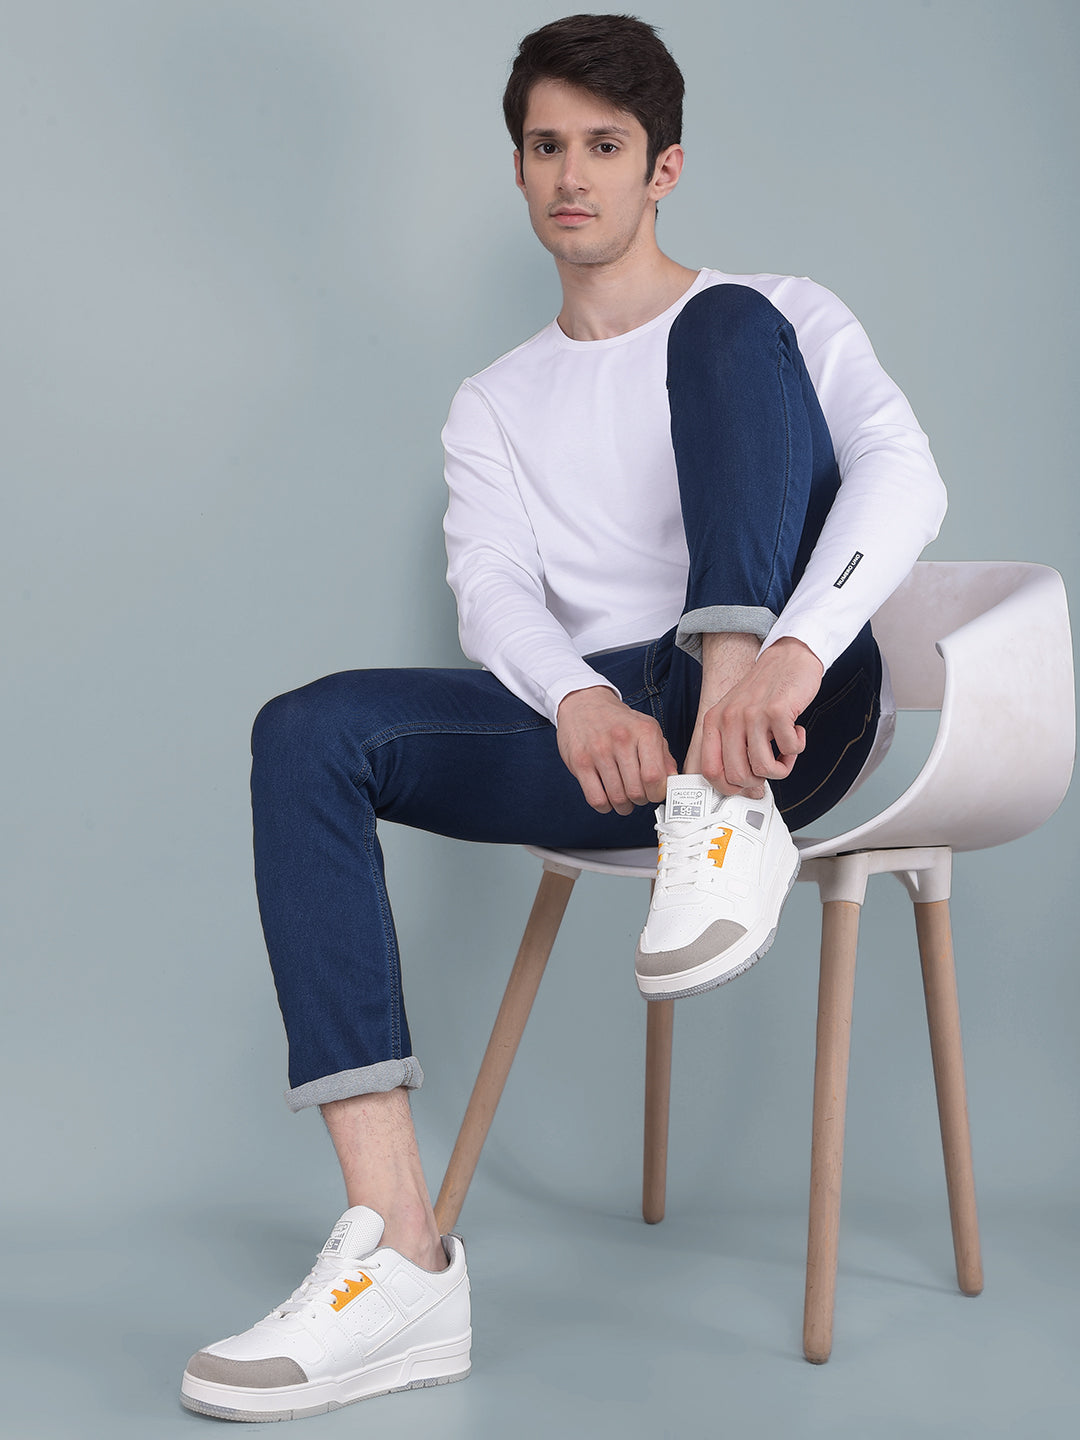 dashing white sneakers for Men ⋆ Best Fashion Blog For Men -  TheUnstitchd.com